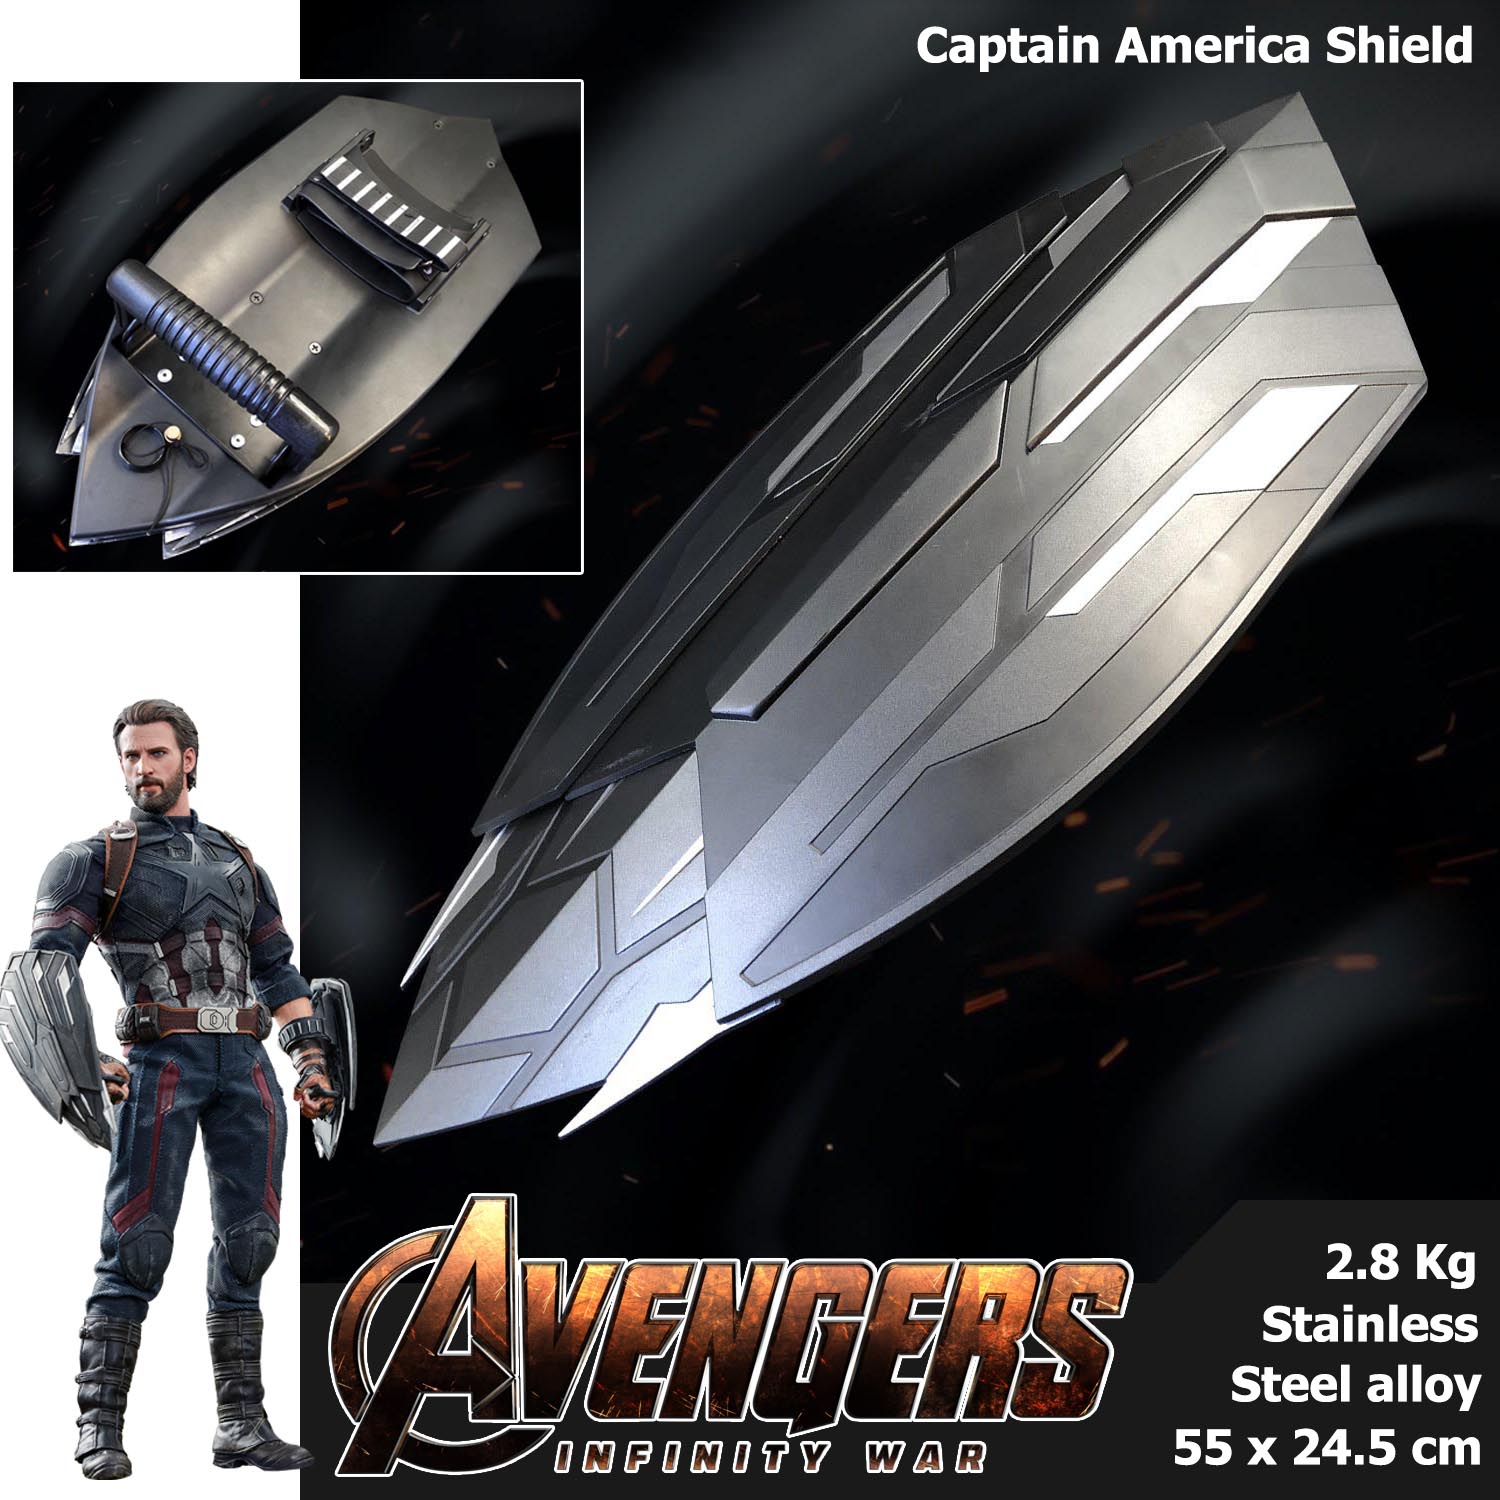 Marvel Captain America Shield โล่เหล็ก ของ กัปตันอเมริกา Avengers Infinity War อเวนเจอร์ส มหาสงครามล้างจักรวาล 1/1 Scale โล่โลหะ โล่ตำรวจ โล่กันดาบซามูไร BBGun บีบีกัน ปราบจลาจล ทนทาน โล่ป้องกัน การโจมตี ใช้รักษา ความปลอดภัย มีลูกเล่นเปลี่ยนรูปทรงได้